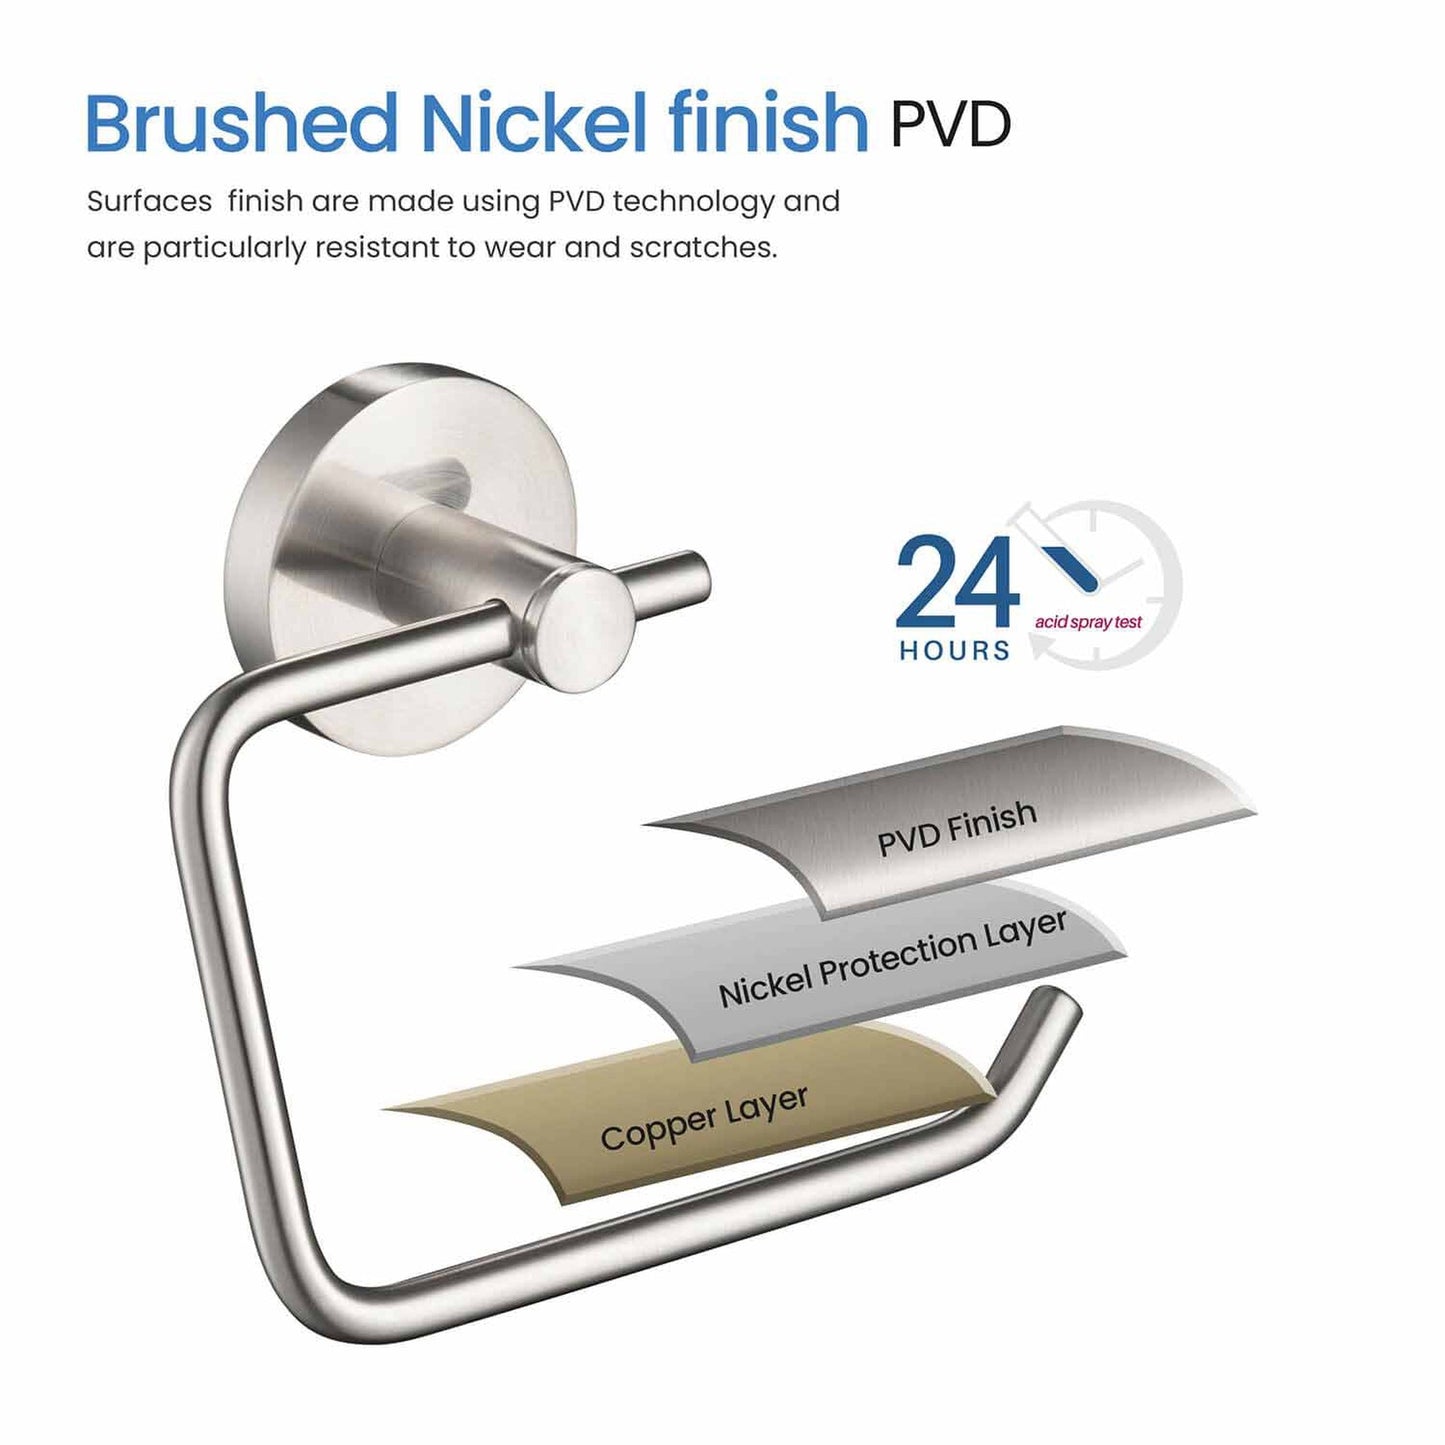 KIBI Circular Brass Bathroom Toilet Paper Holder in Brushed Nickel Finish